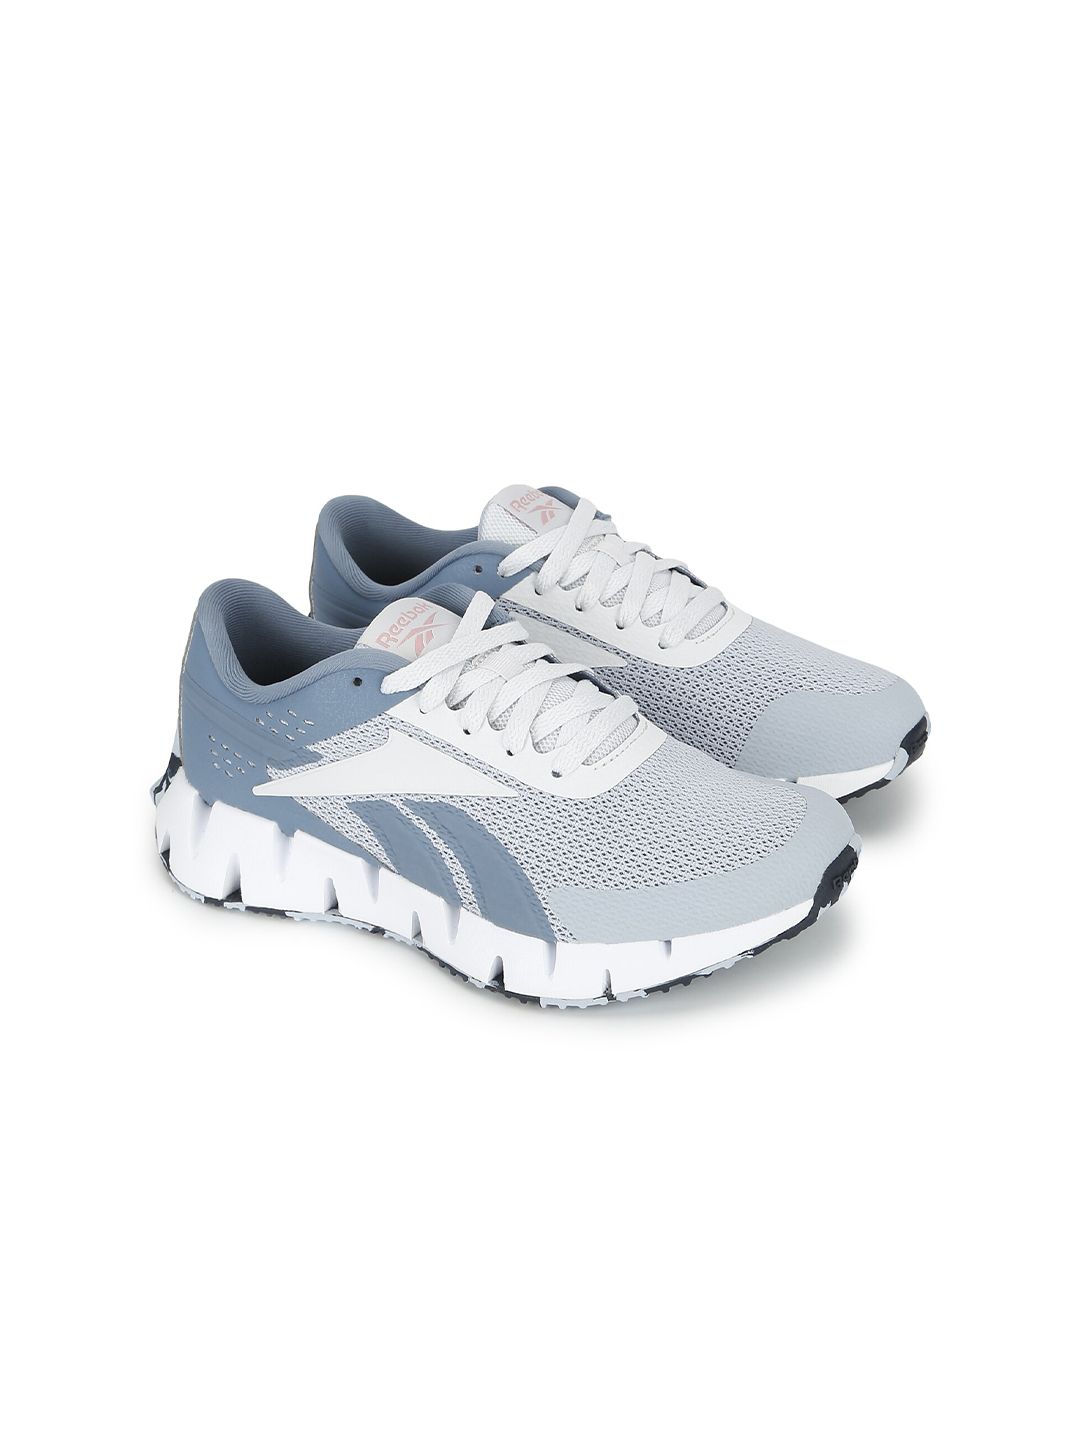 Reebok Women Grey Running Shoes Price in India